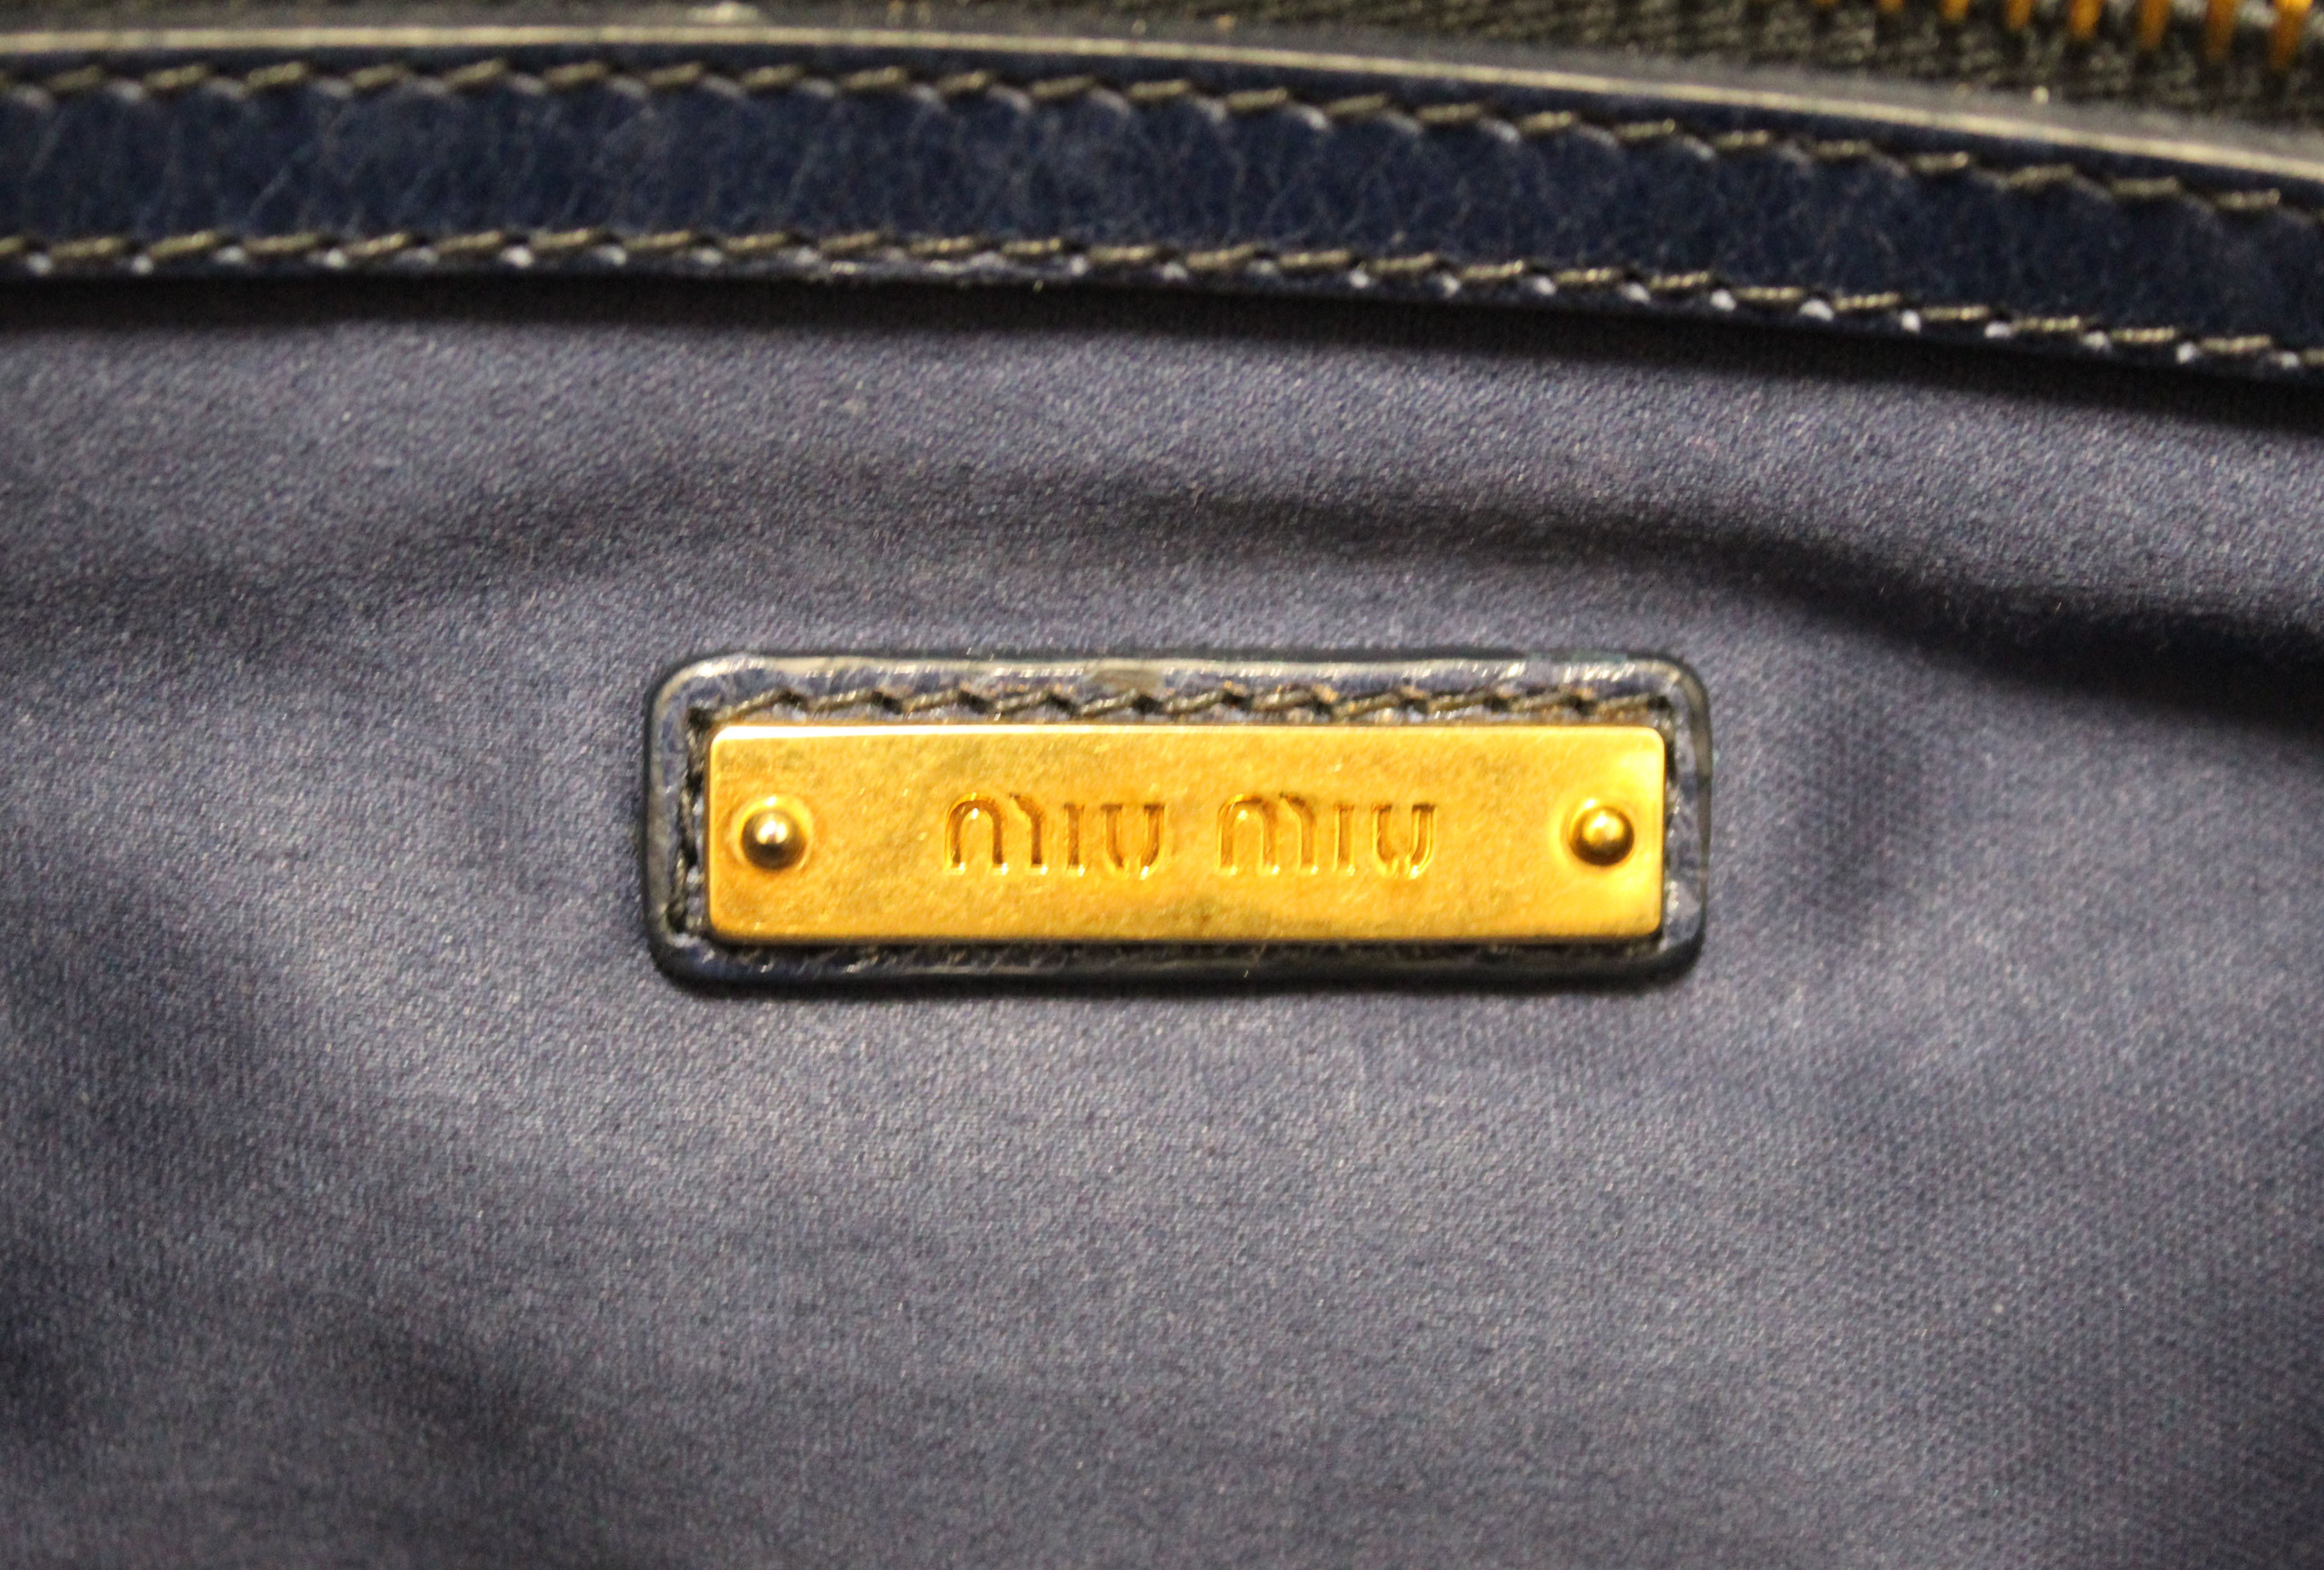 Authentic Miu Miu Blue Vitello Shine Leather Push Lock Flap Shoulder Tote